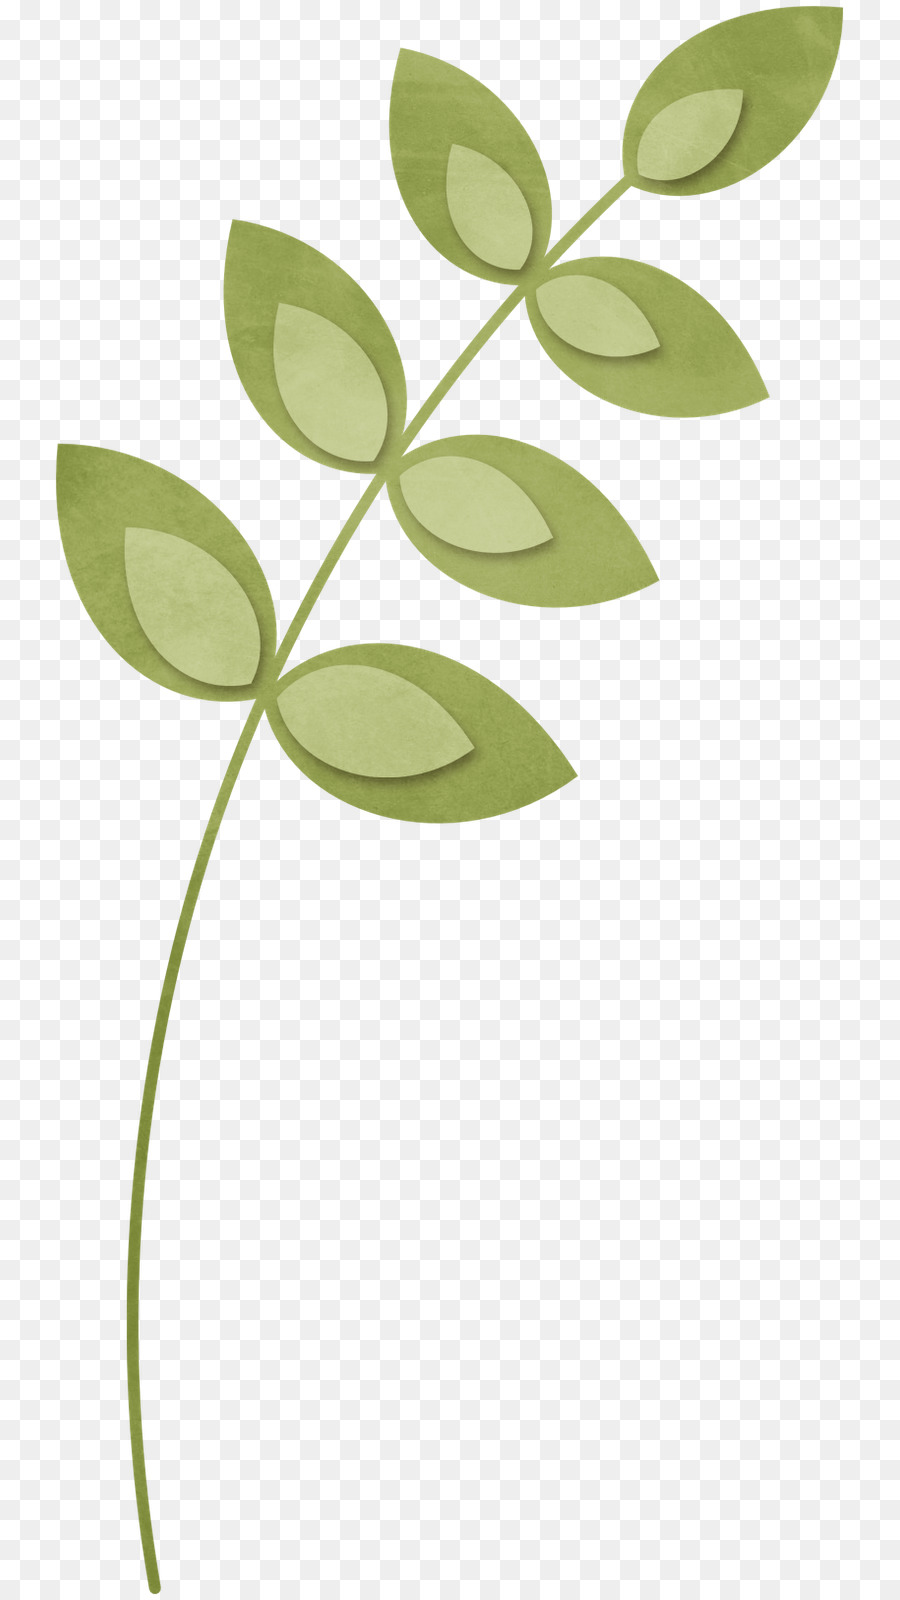 Scrapbooking Plant stem Branch - fairy lights png download - 799*1600 - Free Transparent Scrapbooking png Download.